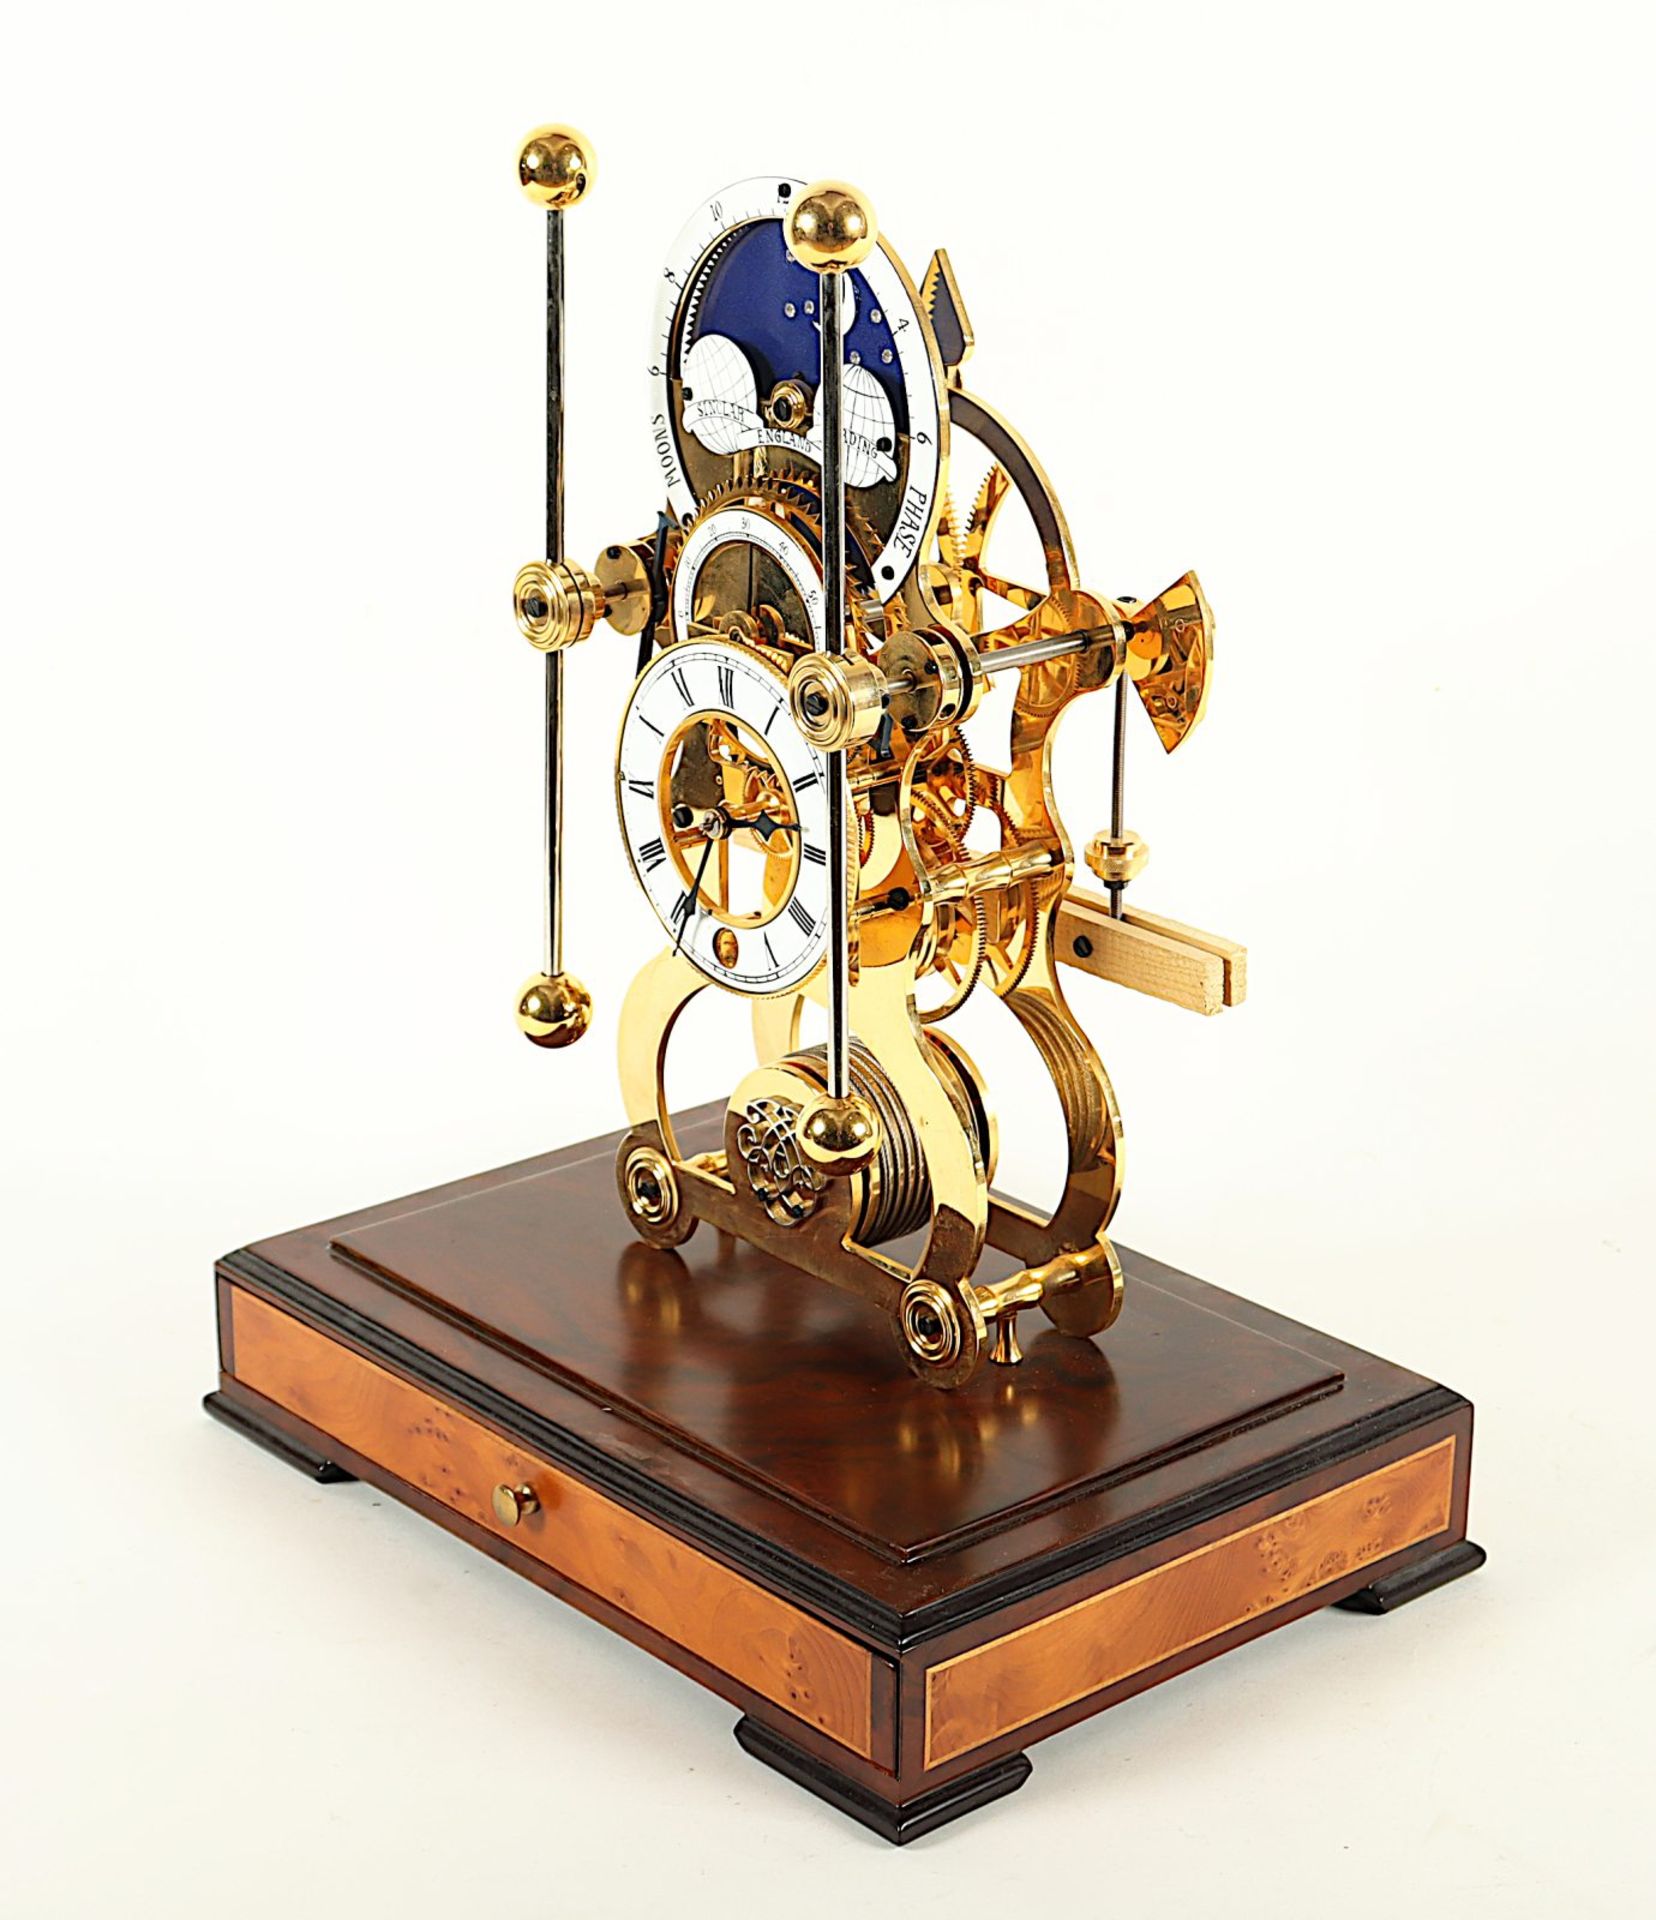 Harrison Grasshopper Sea Clock, Sinclair, Harding, 20. Jh. - Image 3 of 6